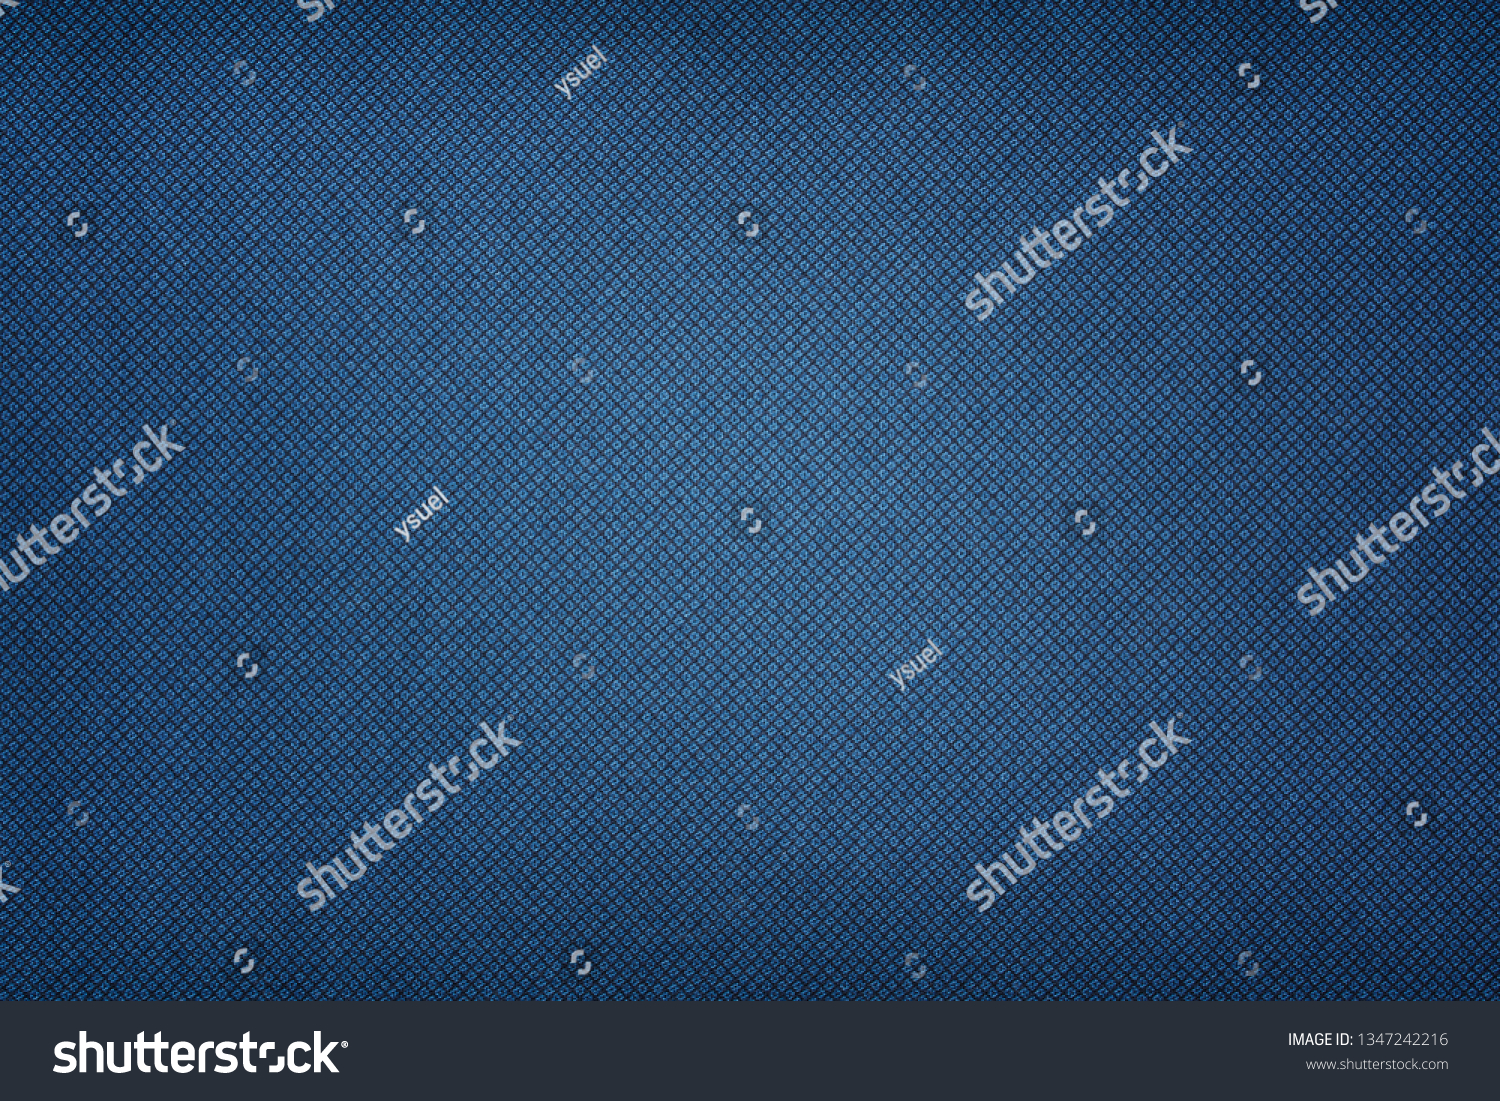 Blue fabric texture Images, Stock Photos & Vectors | Shutterstock